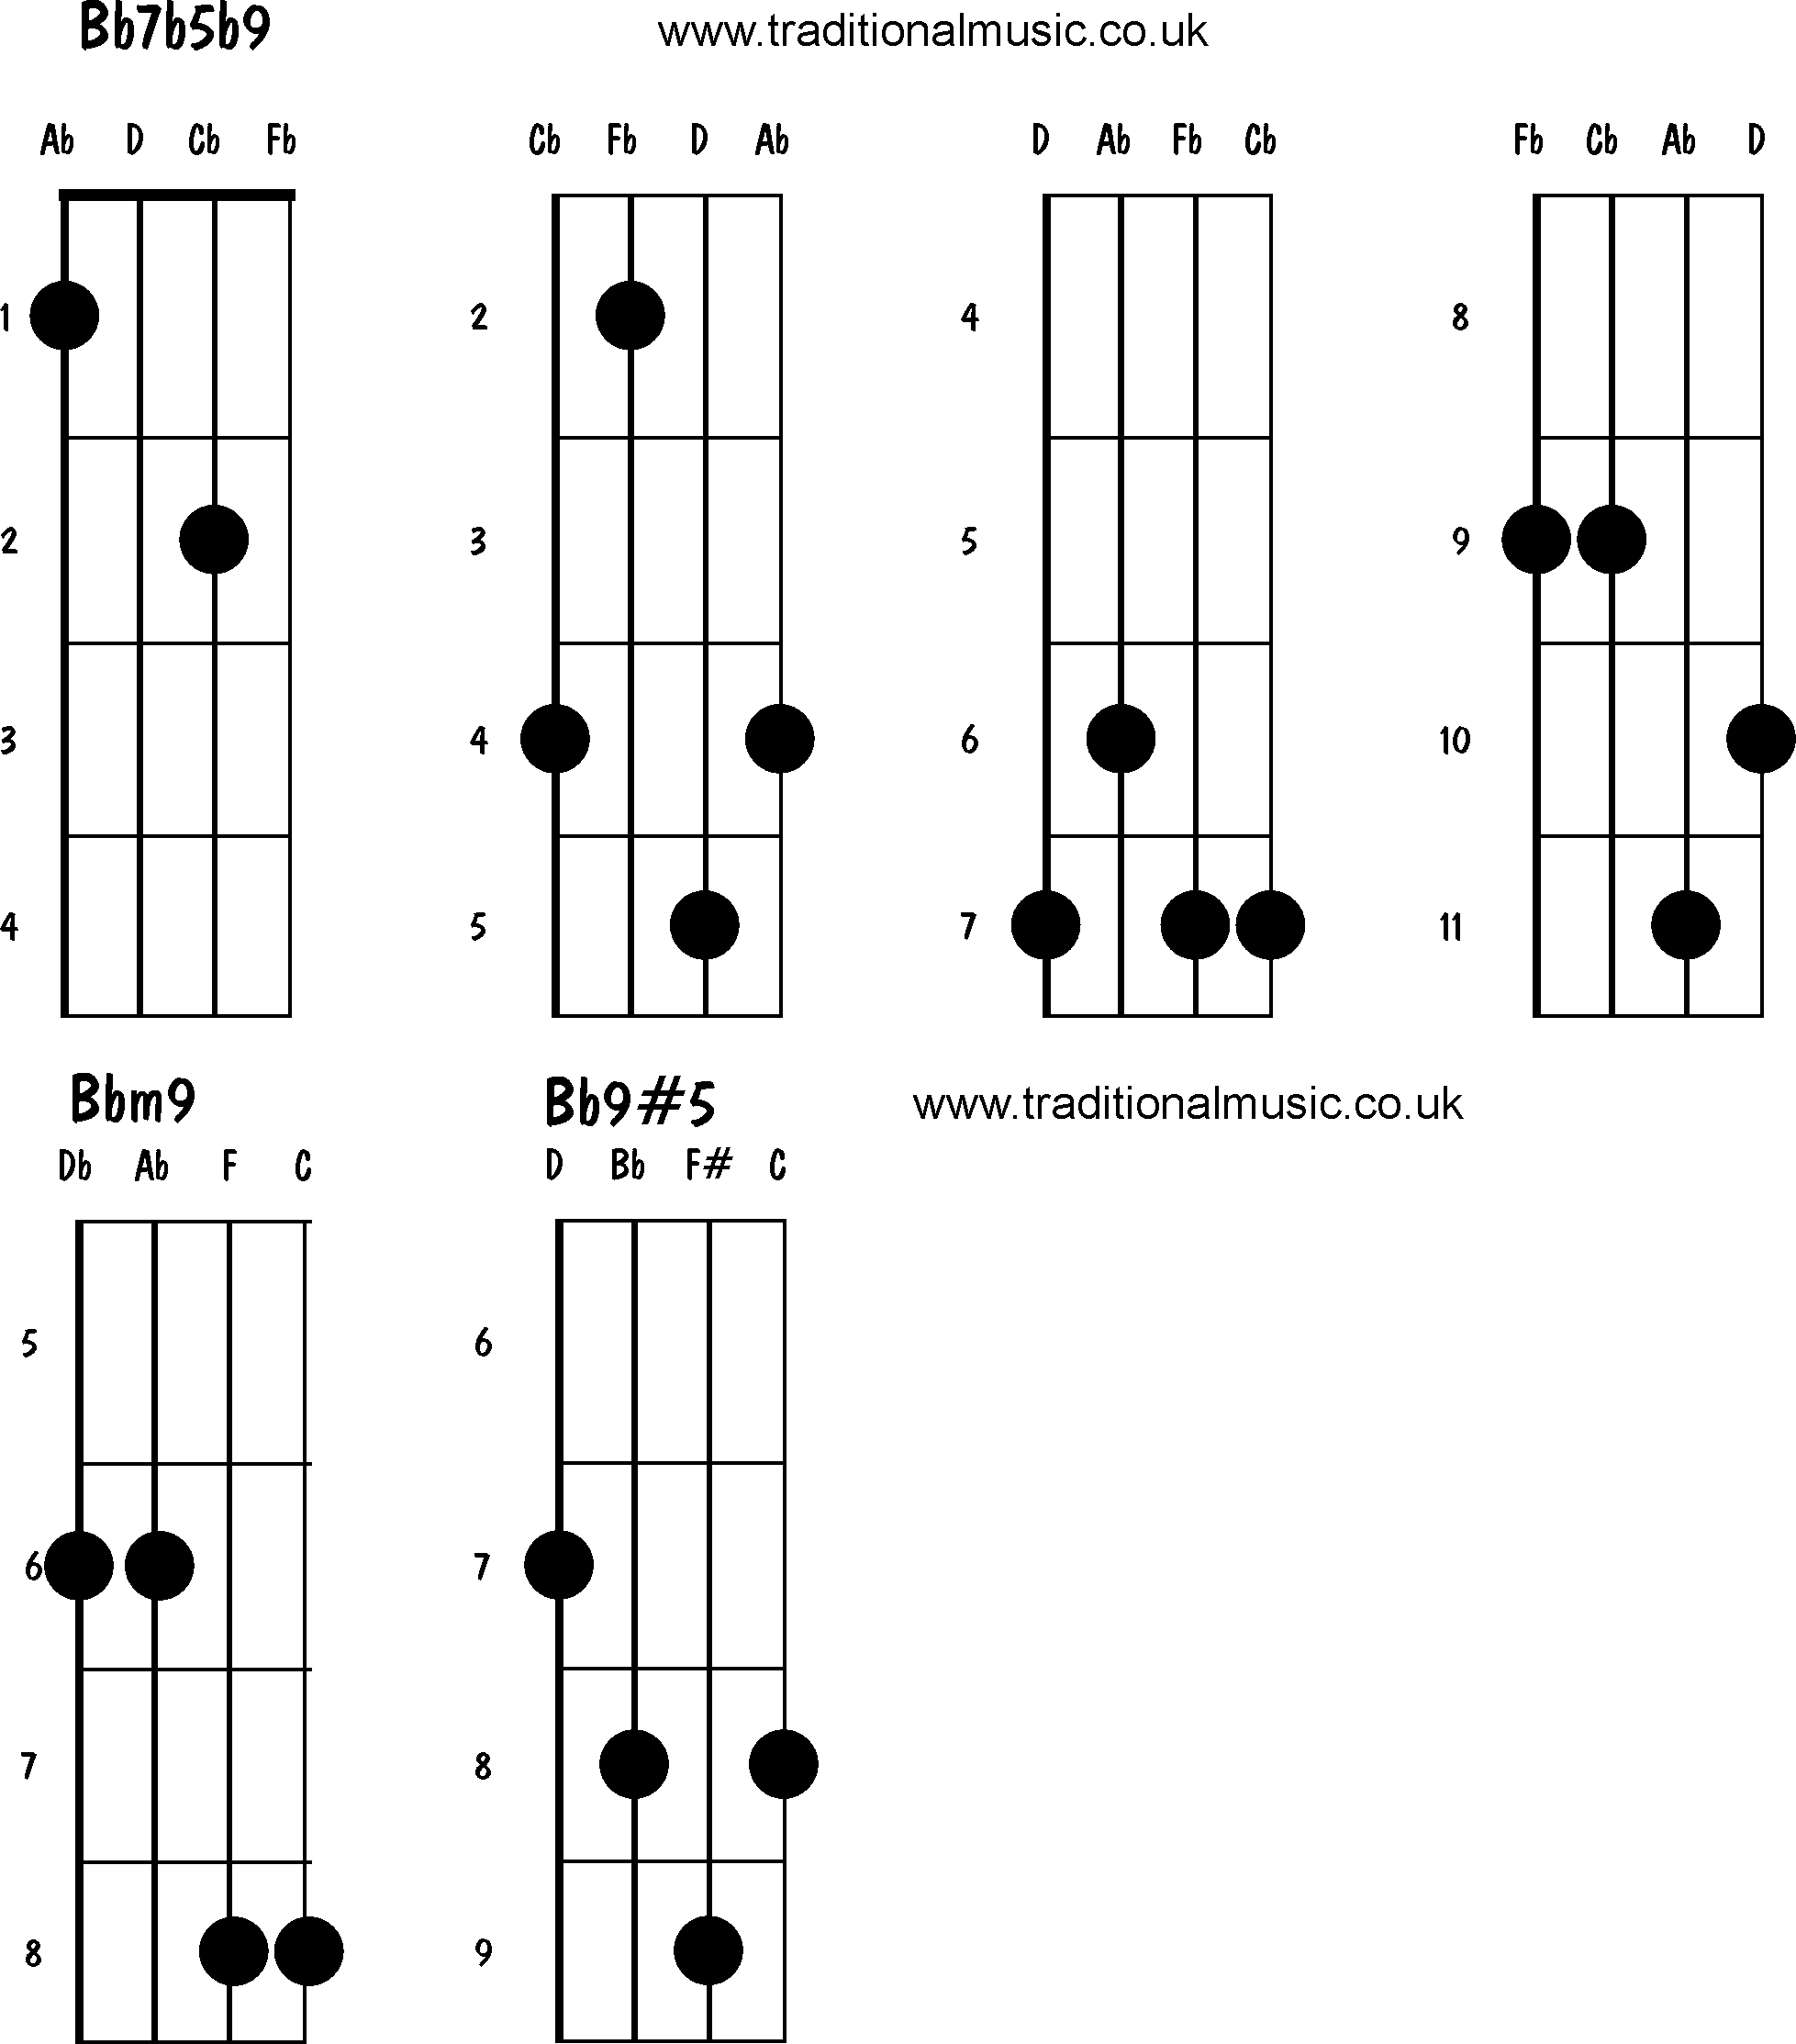 Advanced mandolin chords:Bb7b5b9, Bbm9, Bb9#5